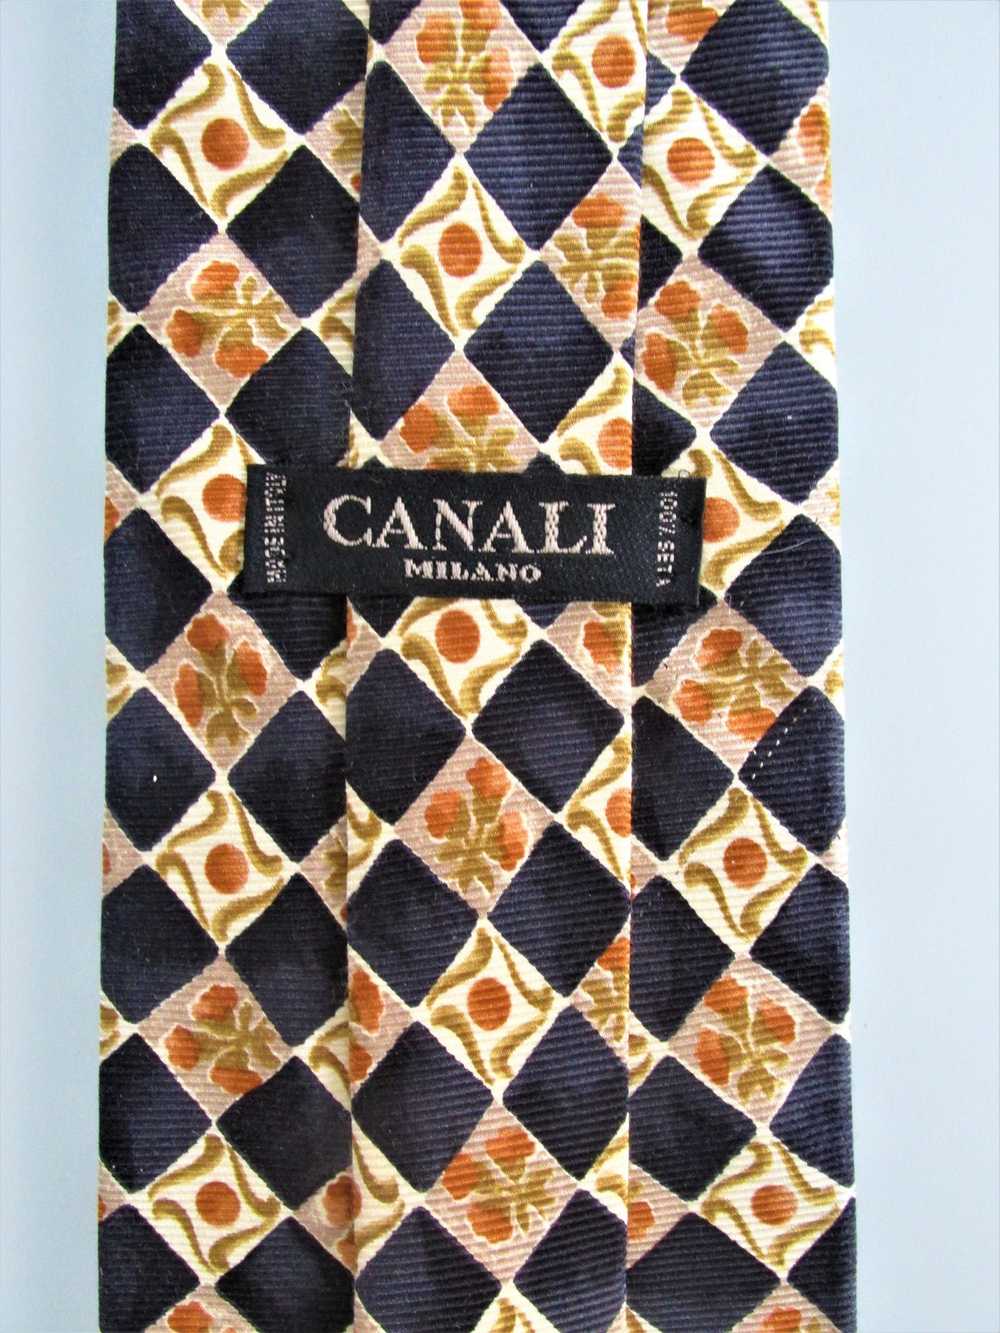 Canali Canali Men's Silk Tie - image 4